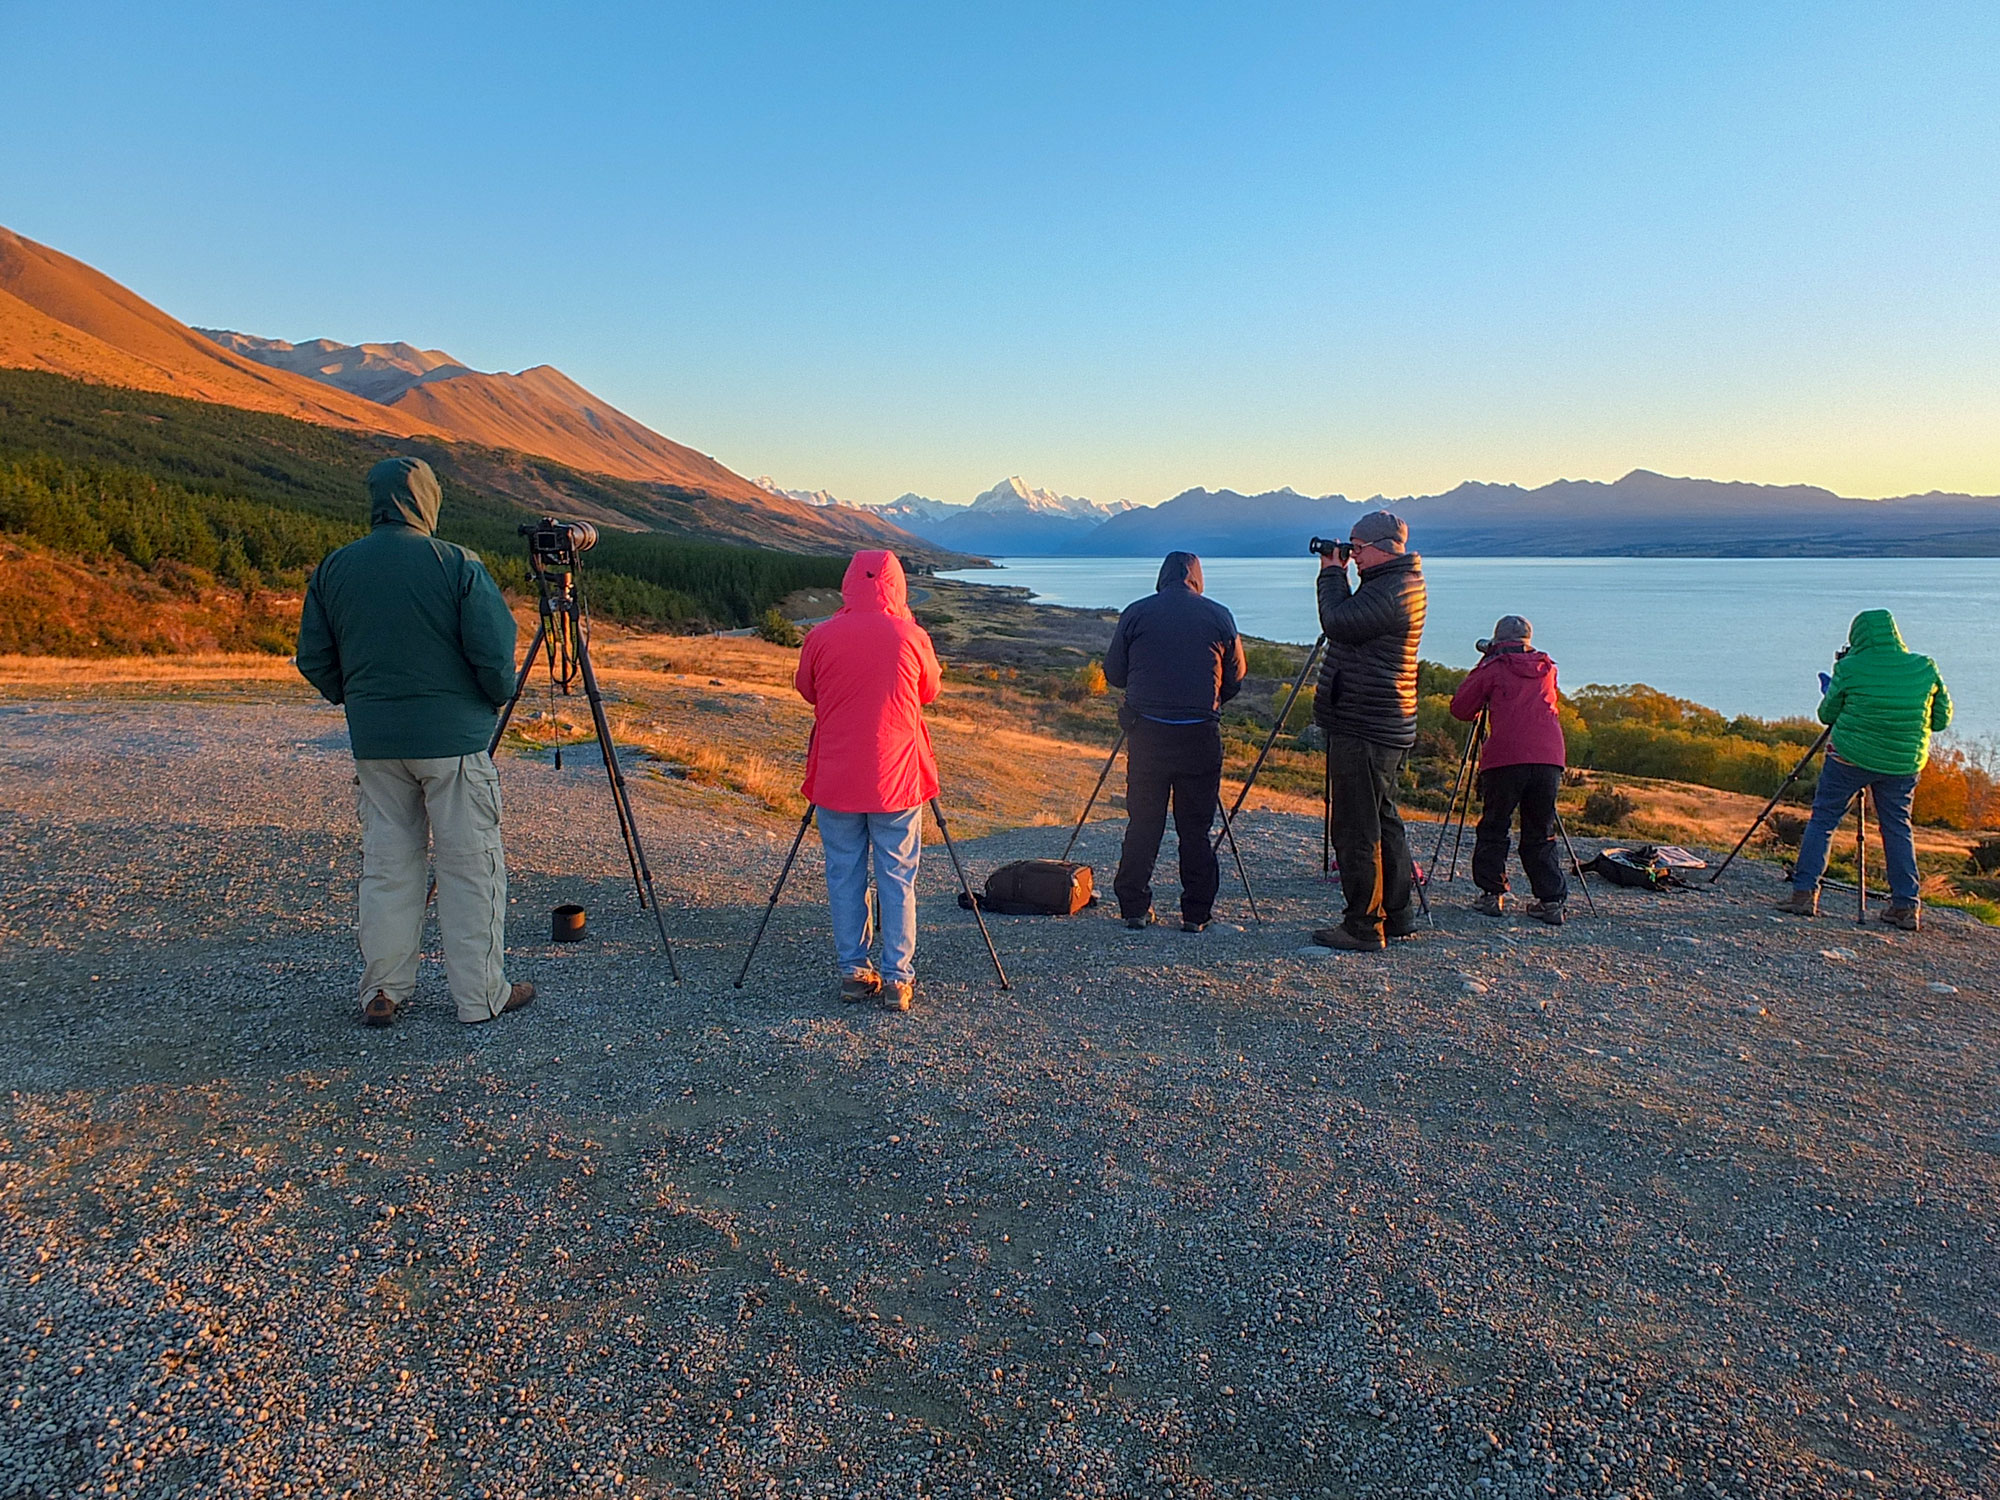 Photography tour to Lake Pukaki, Mt Cook